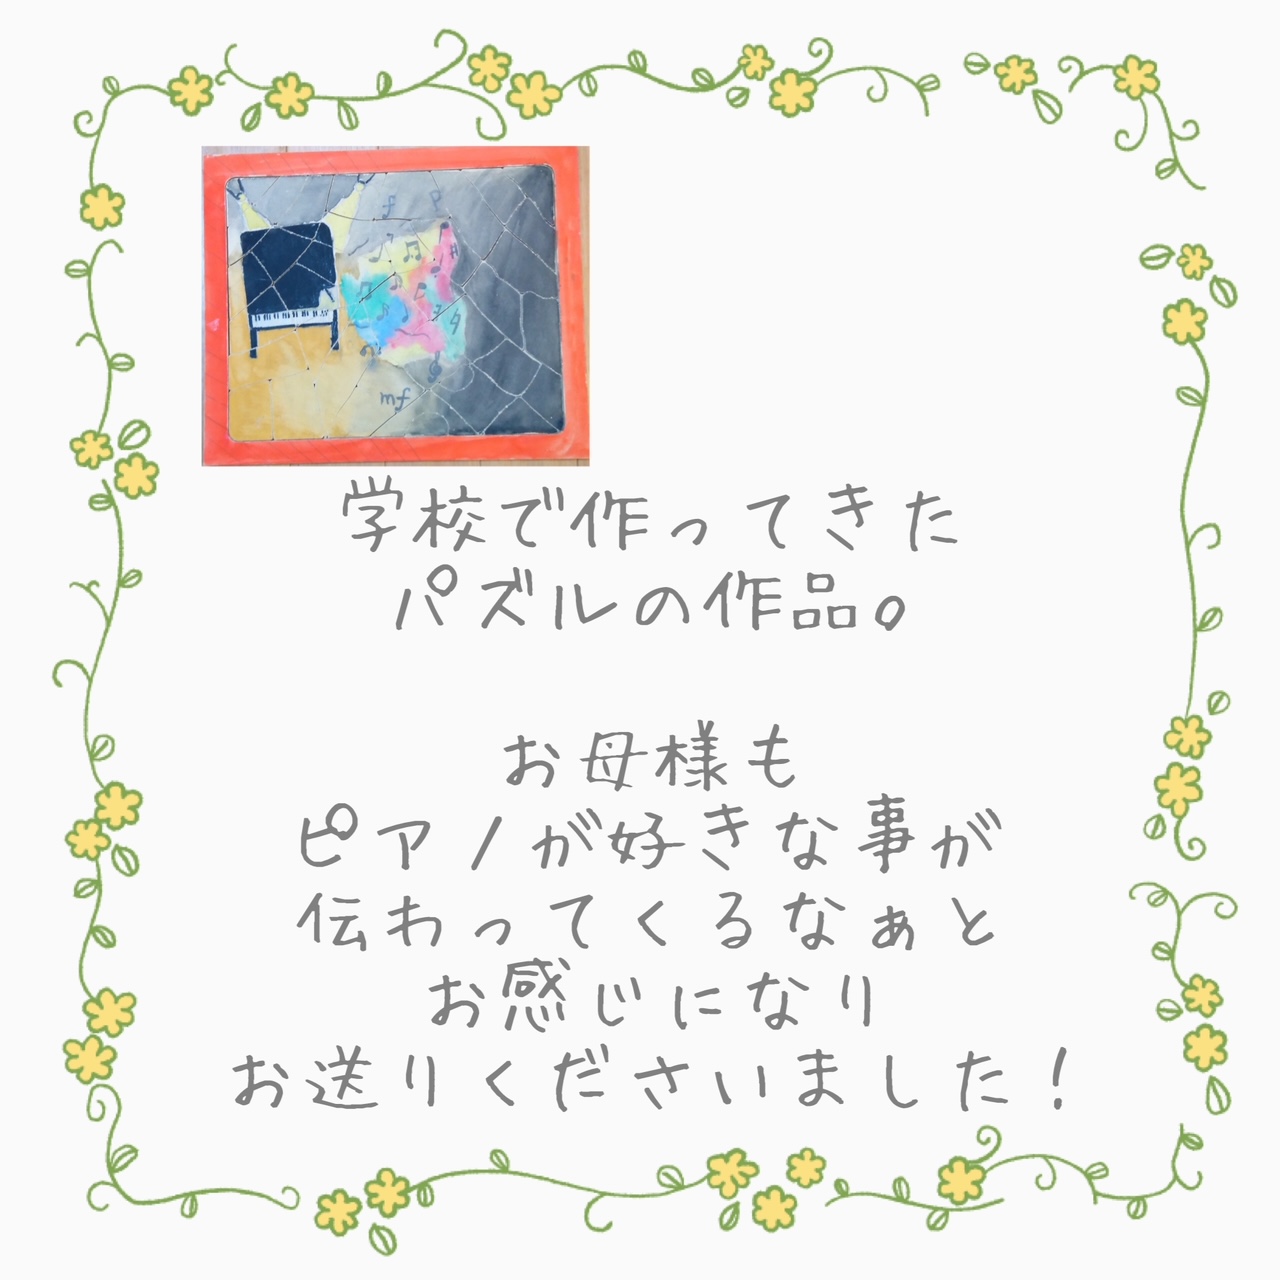 image111.jpeg alt="Misuzu Music Houseにお通いの男の子の作品です"